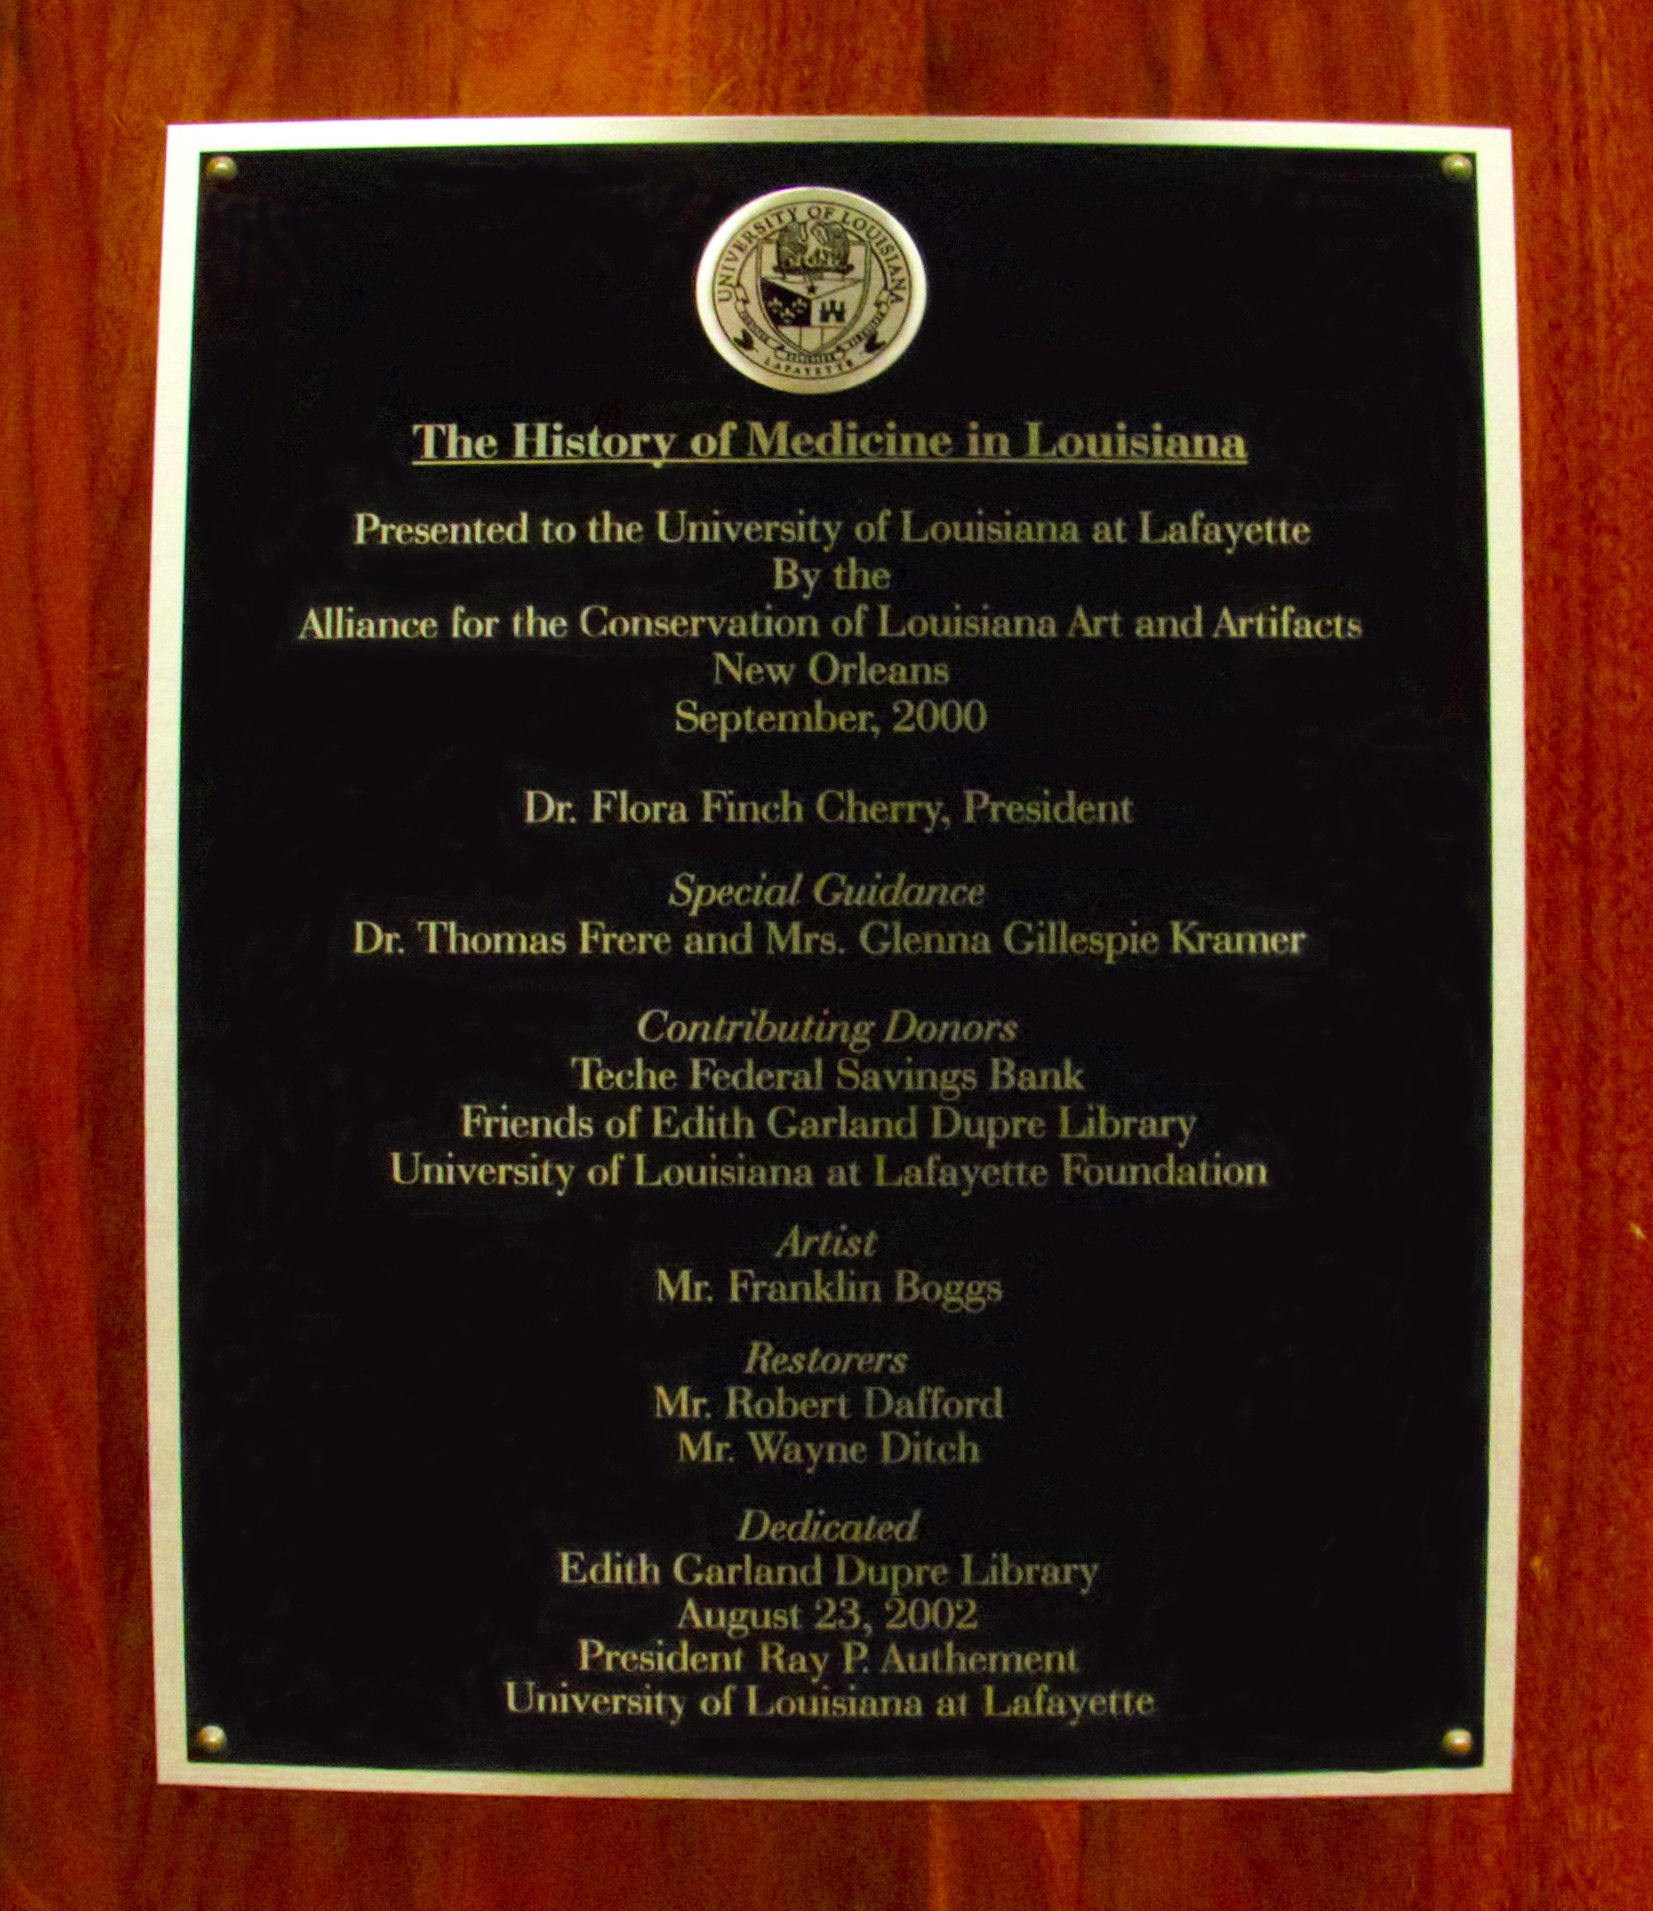 The History of Medicine Mural Dedication Plaque